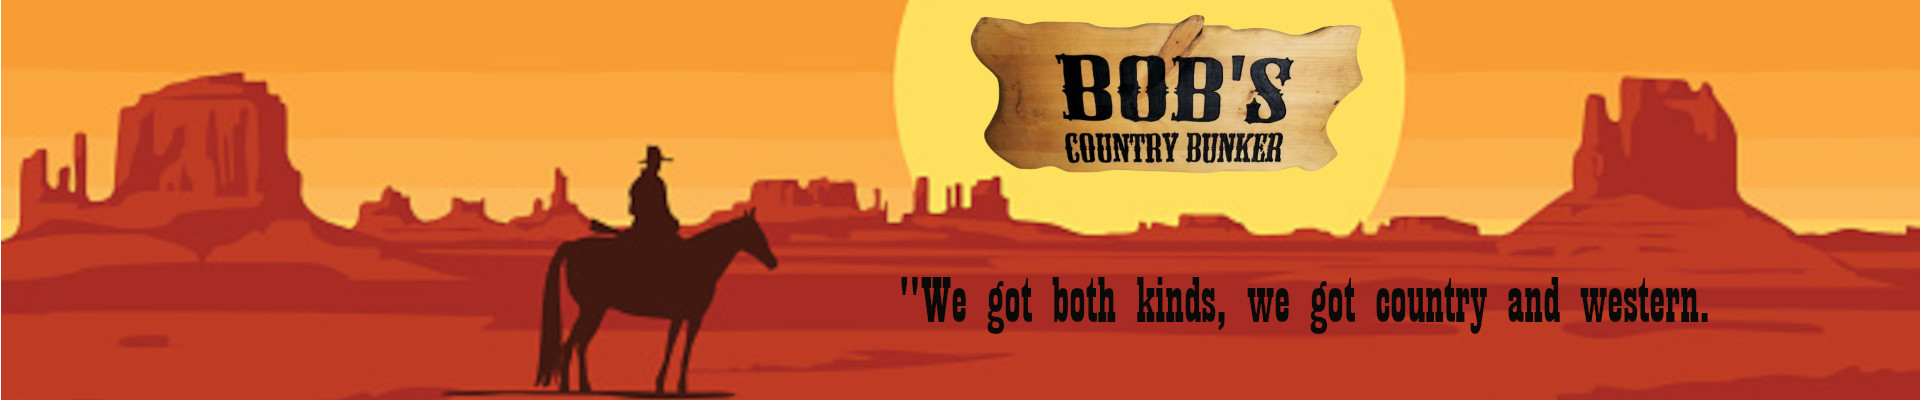 Bob's Country Bunker